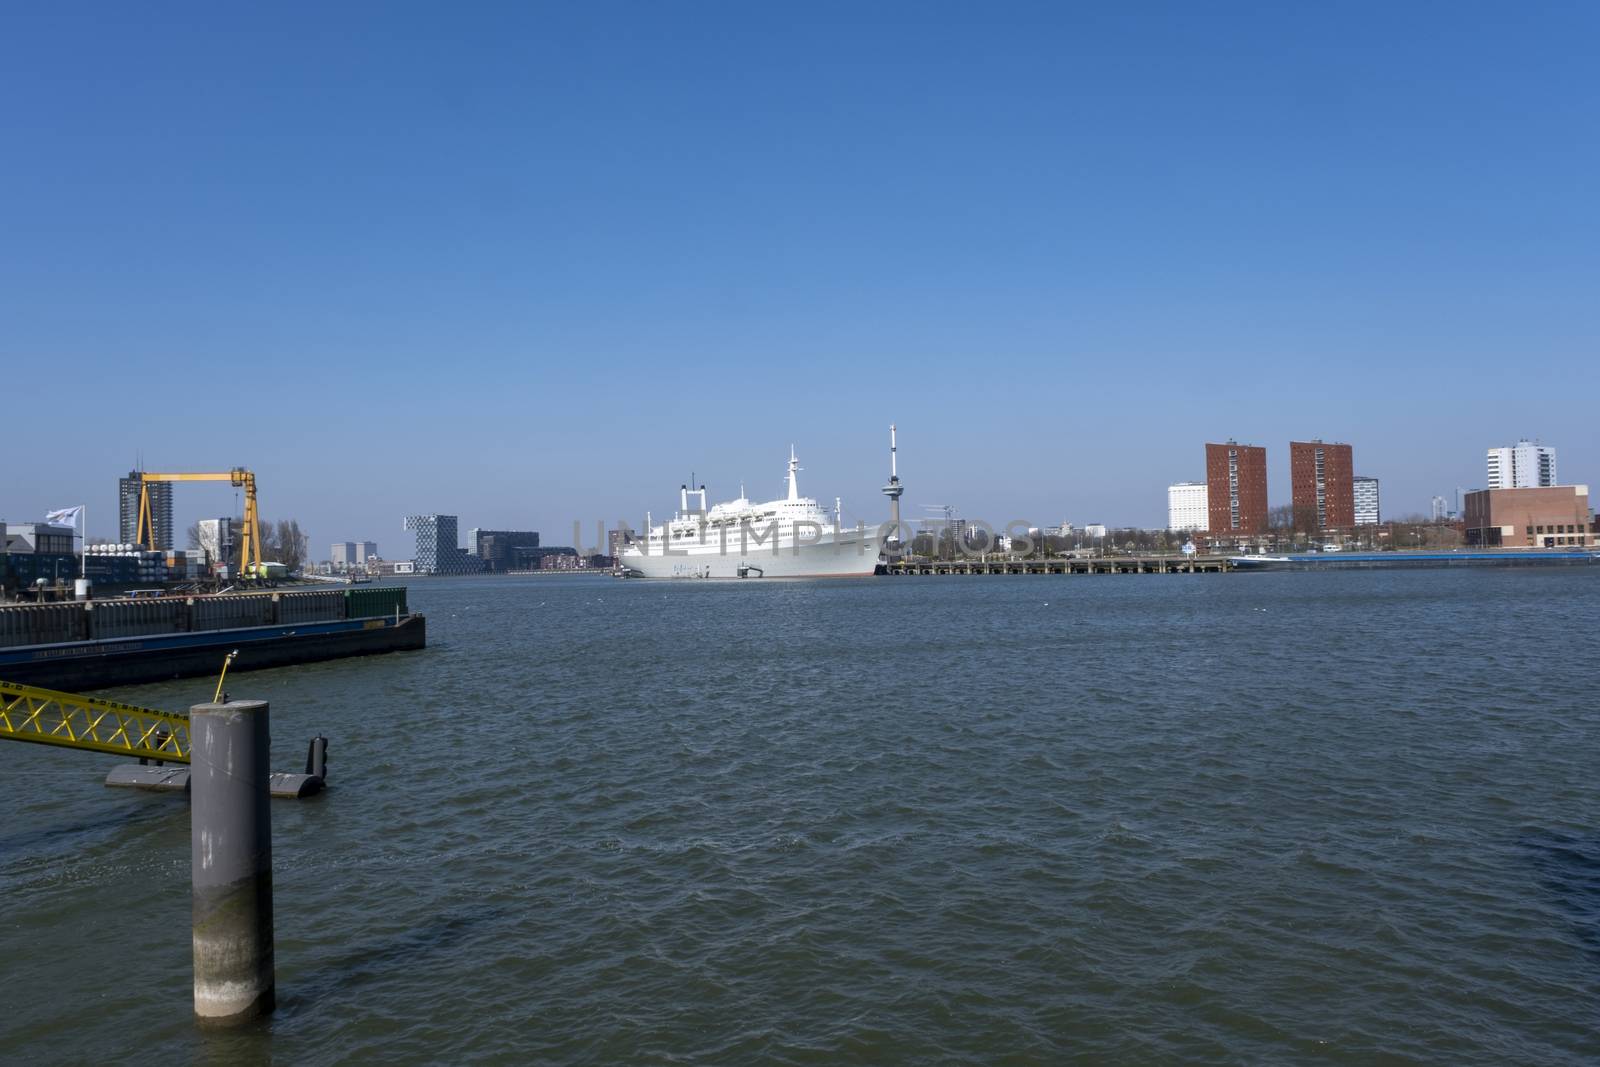 SS Rotterdam Cruiseship in the harbor of Rotterdam by Tjeerdkruse